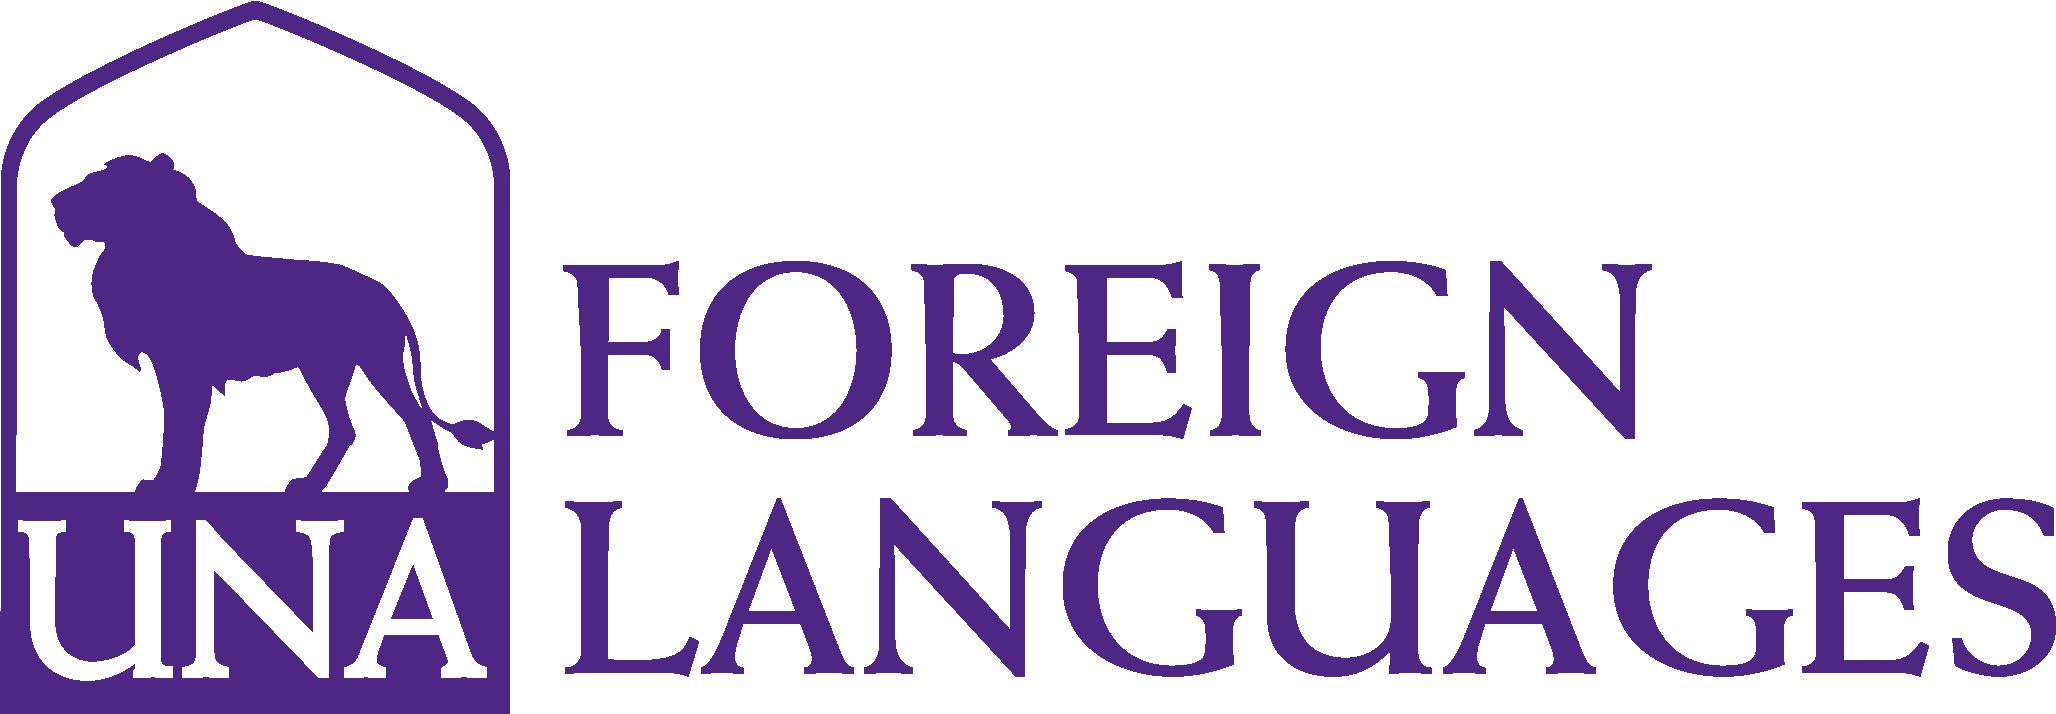 Foreign Languages logo 3